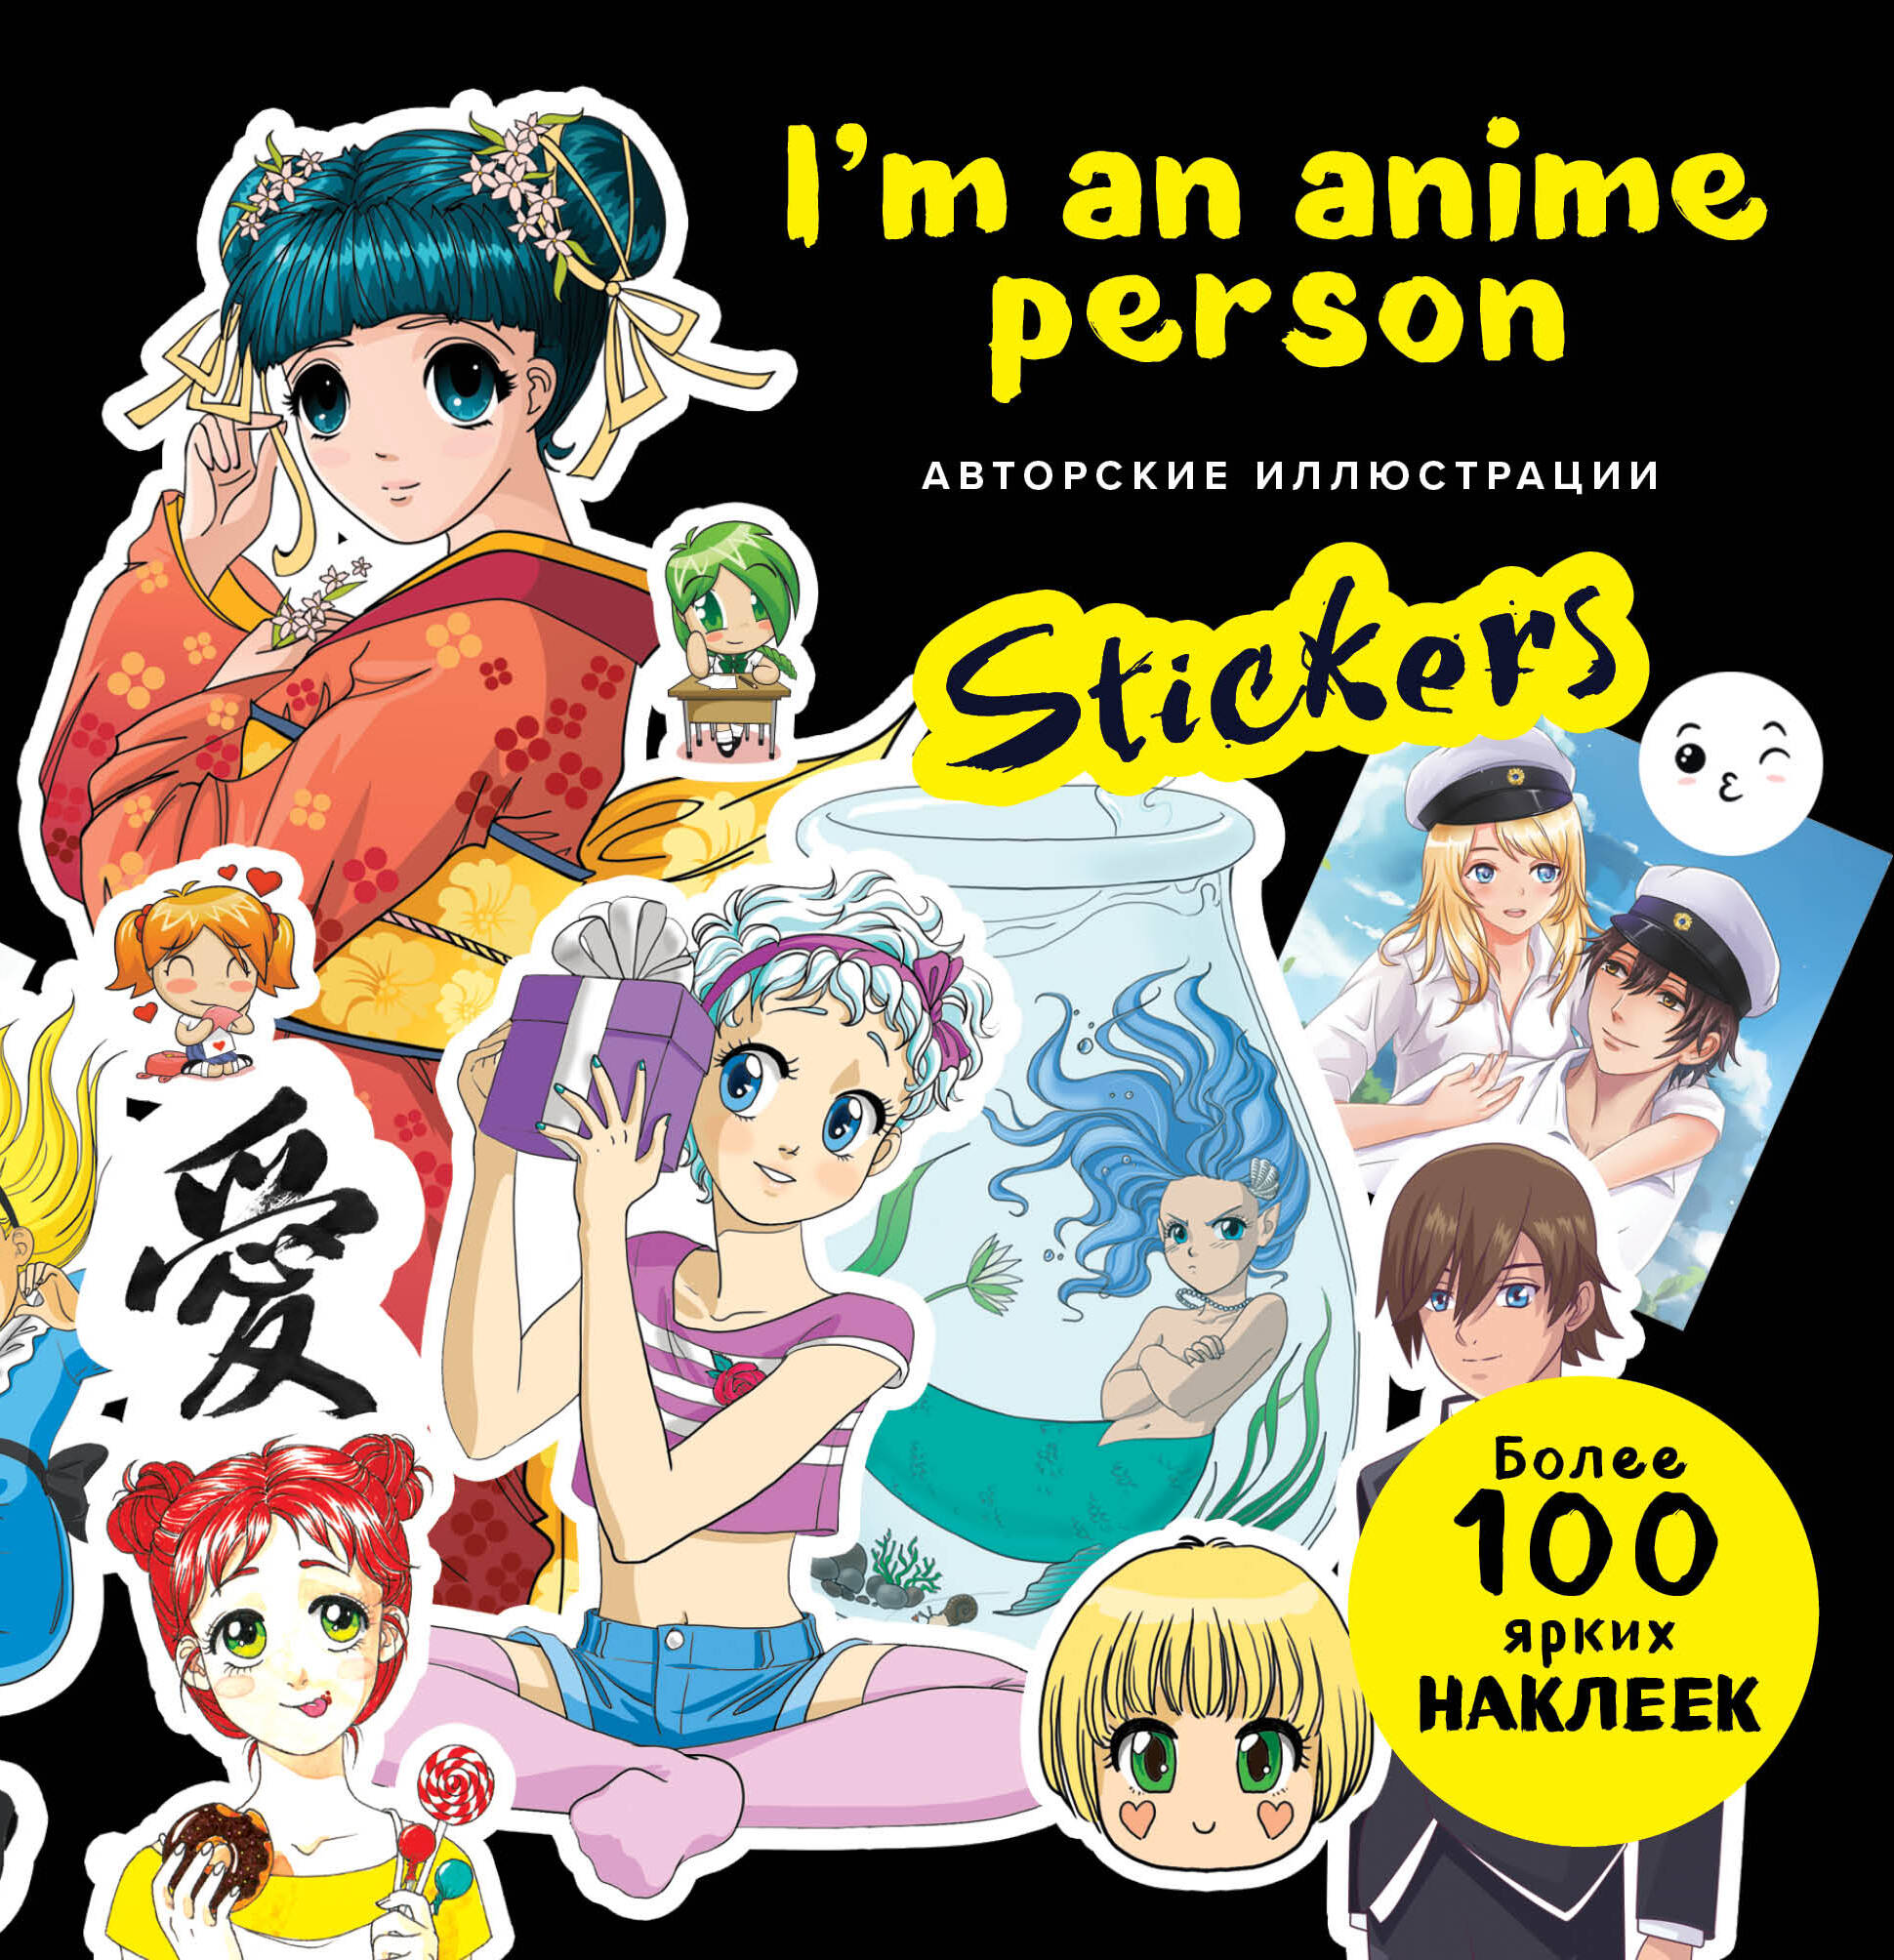 Im an anime person. Stickers. Более 100 ярких наклеек!